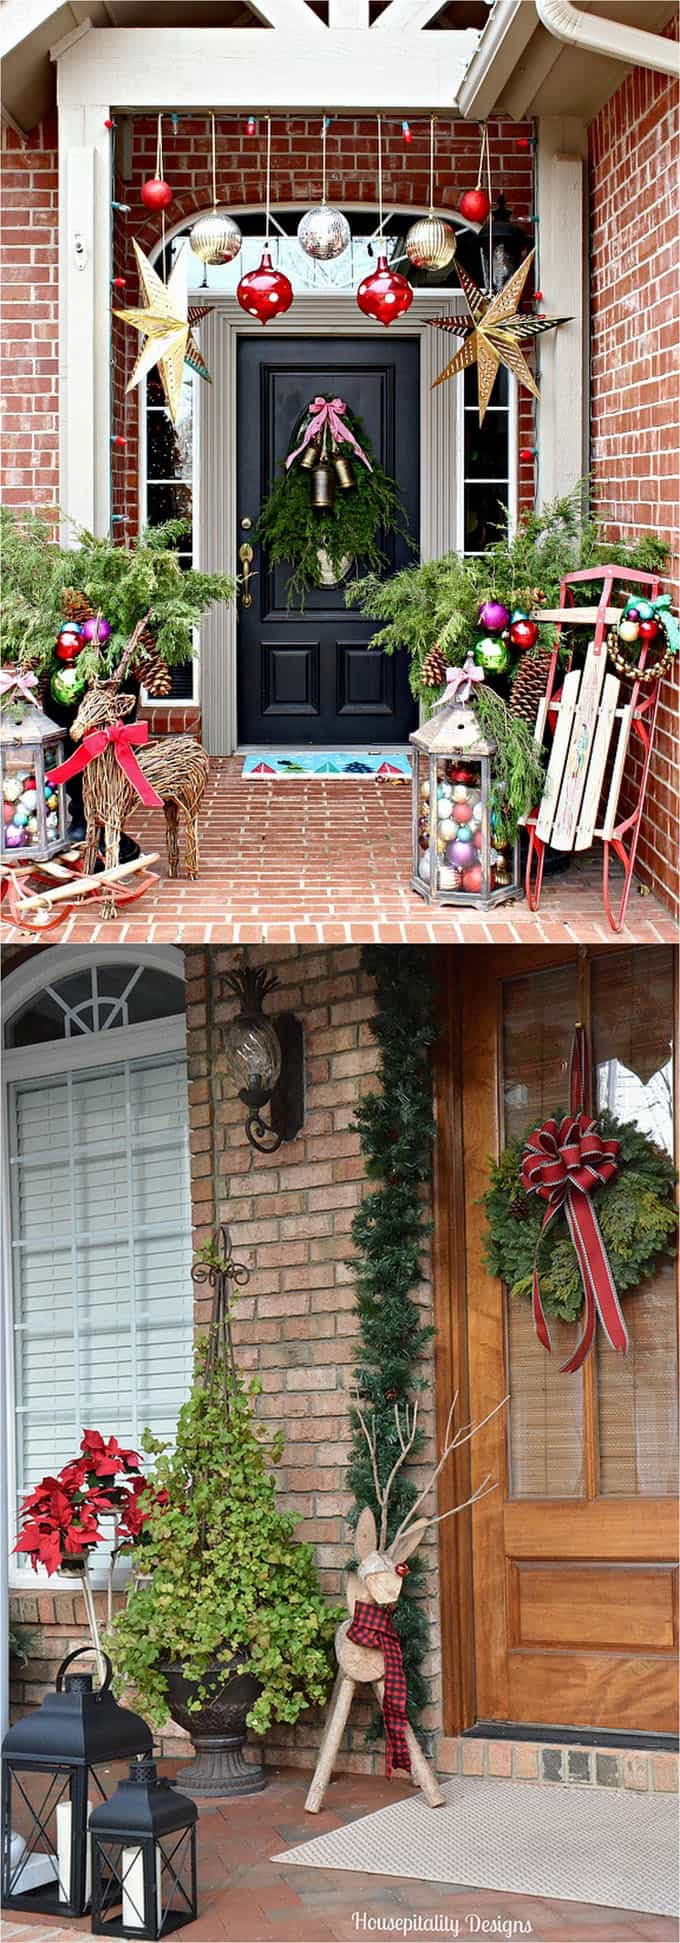 Best ideas about DIY Christmas Decorations Outdoor
. Save or Pin Gorgeous Outdoor Christmas Decorations 32 Best Ideas Now.